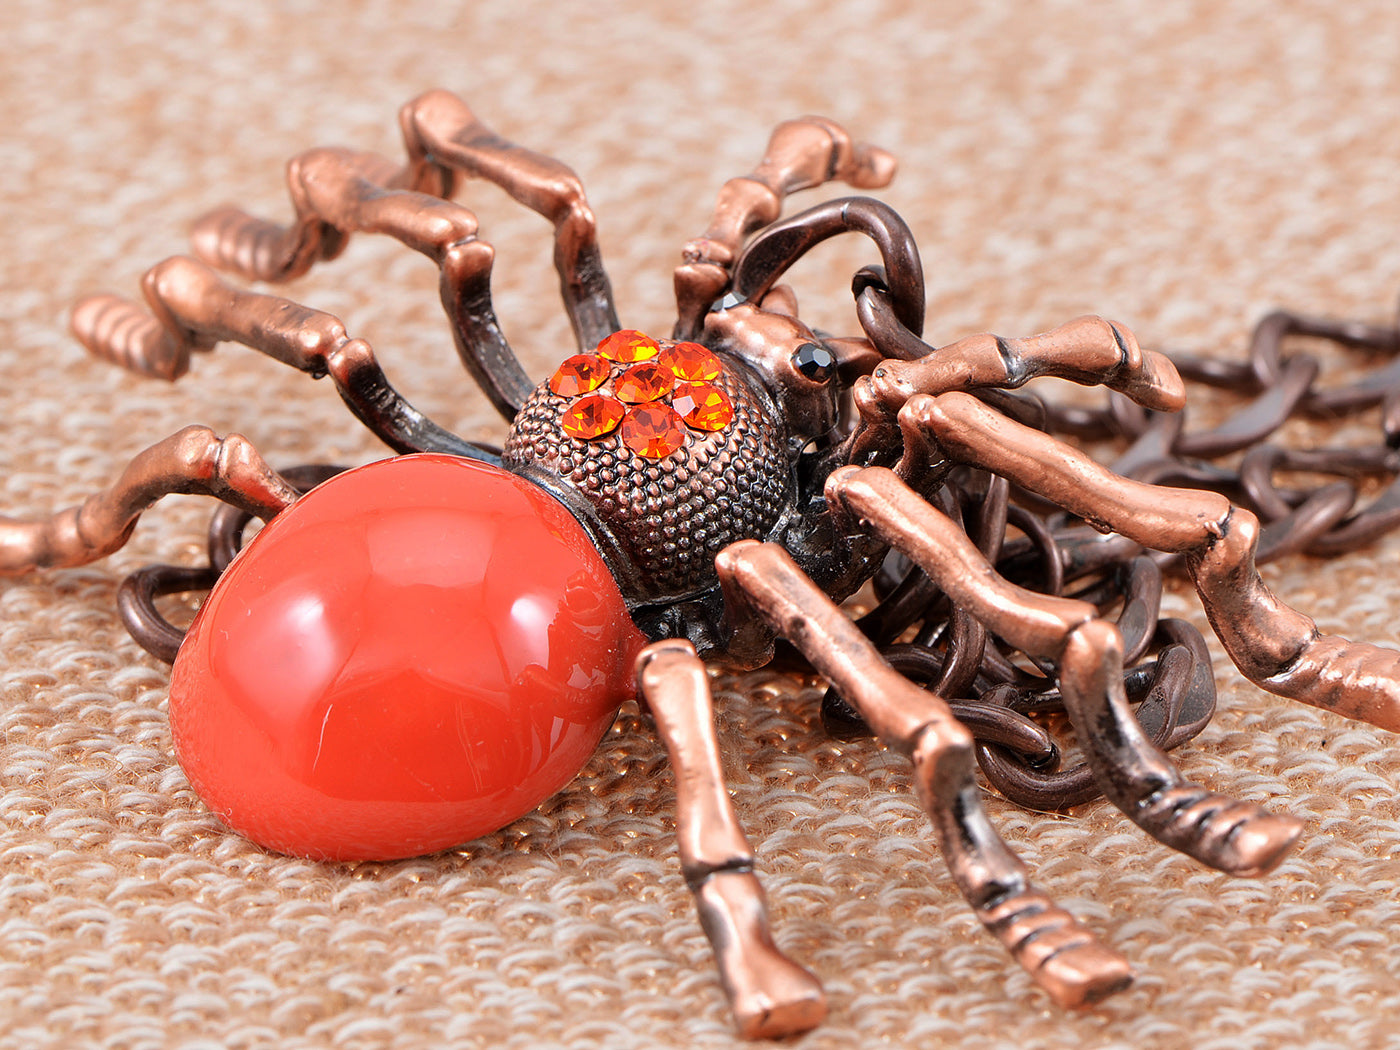 Rusty Brass Shine Red Orange Spider Queen Pendant Necklace